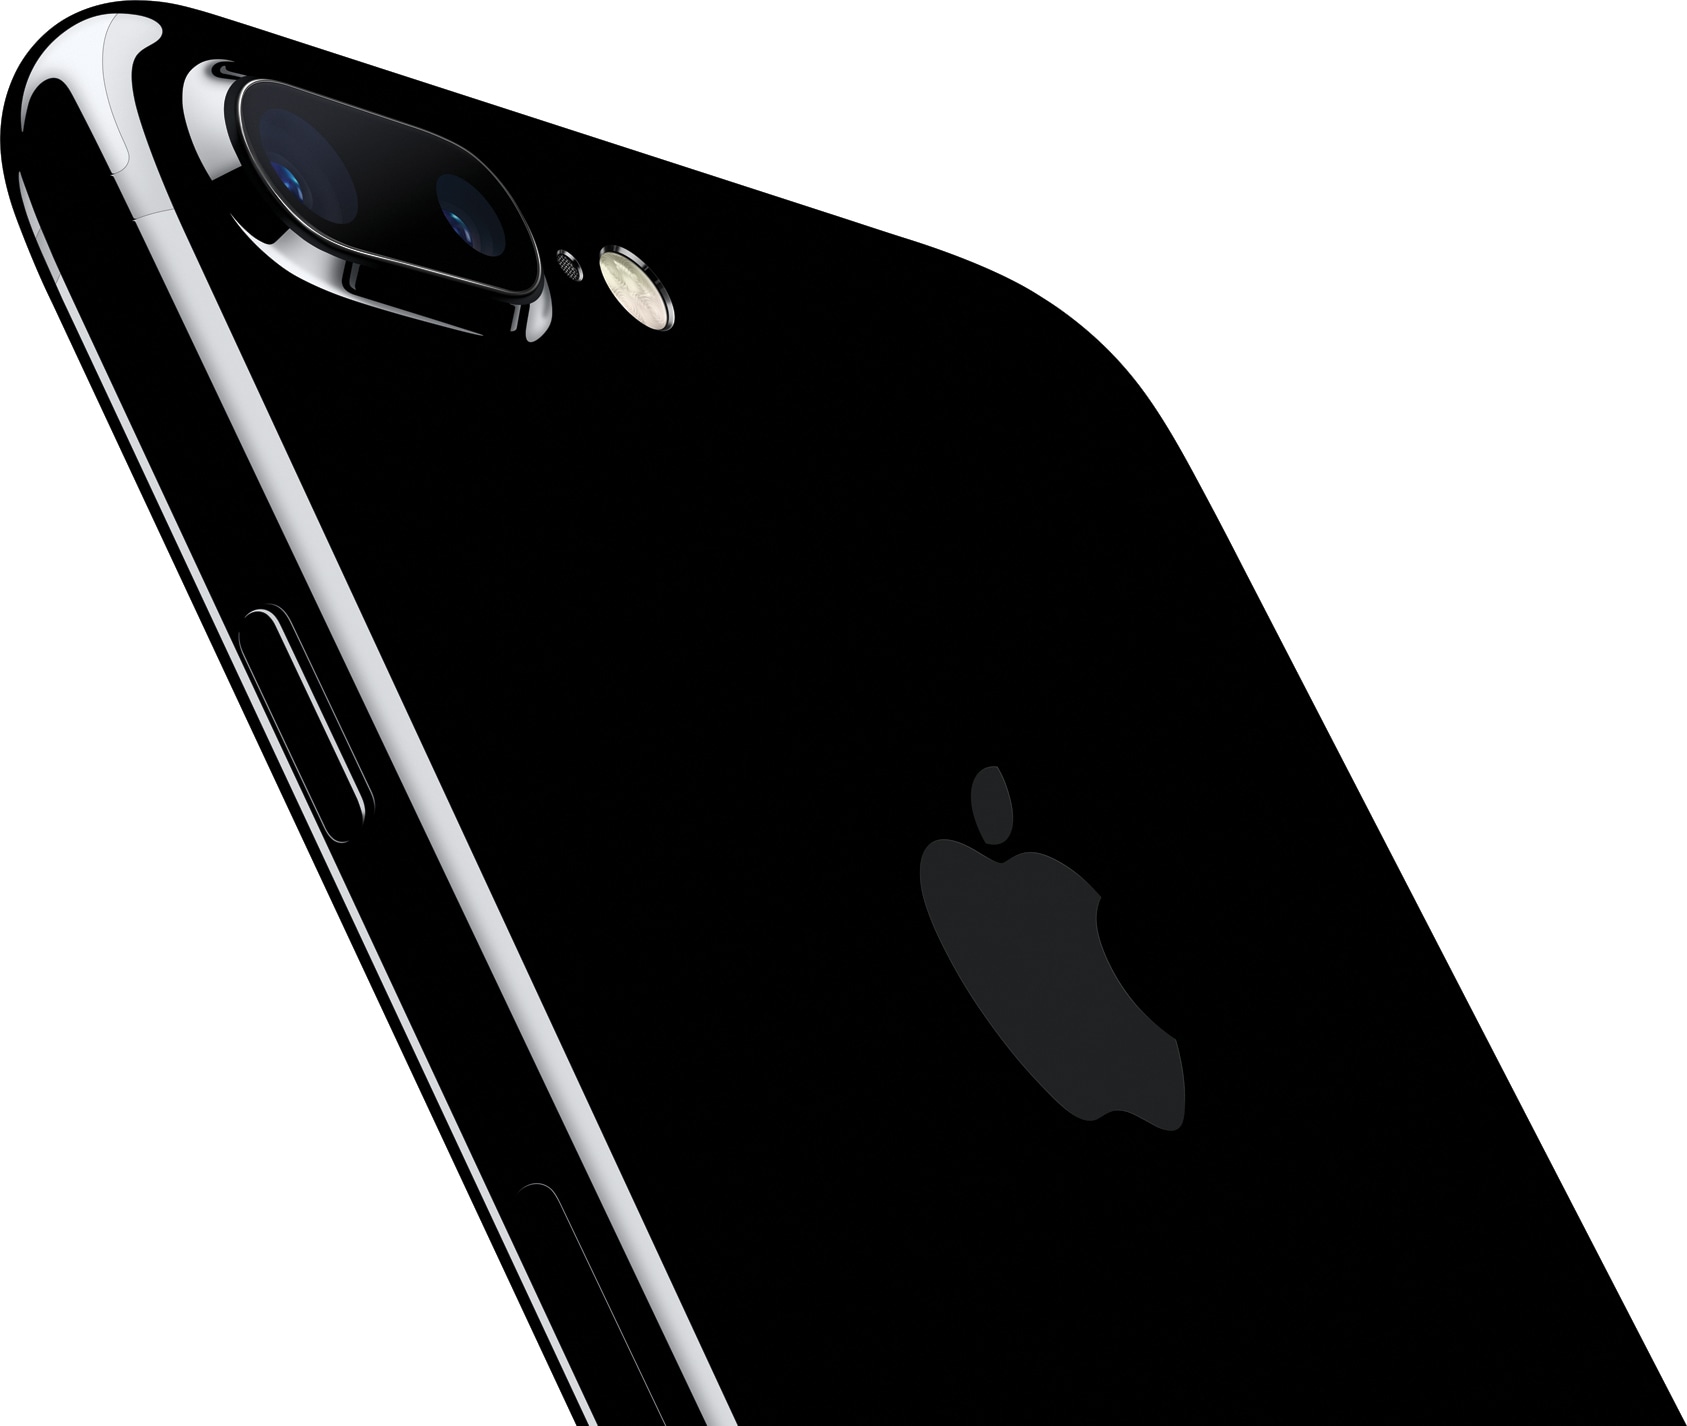 iPhone 7 Plus jet black inclinado de costas